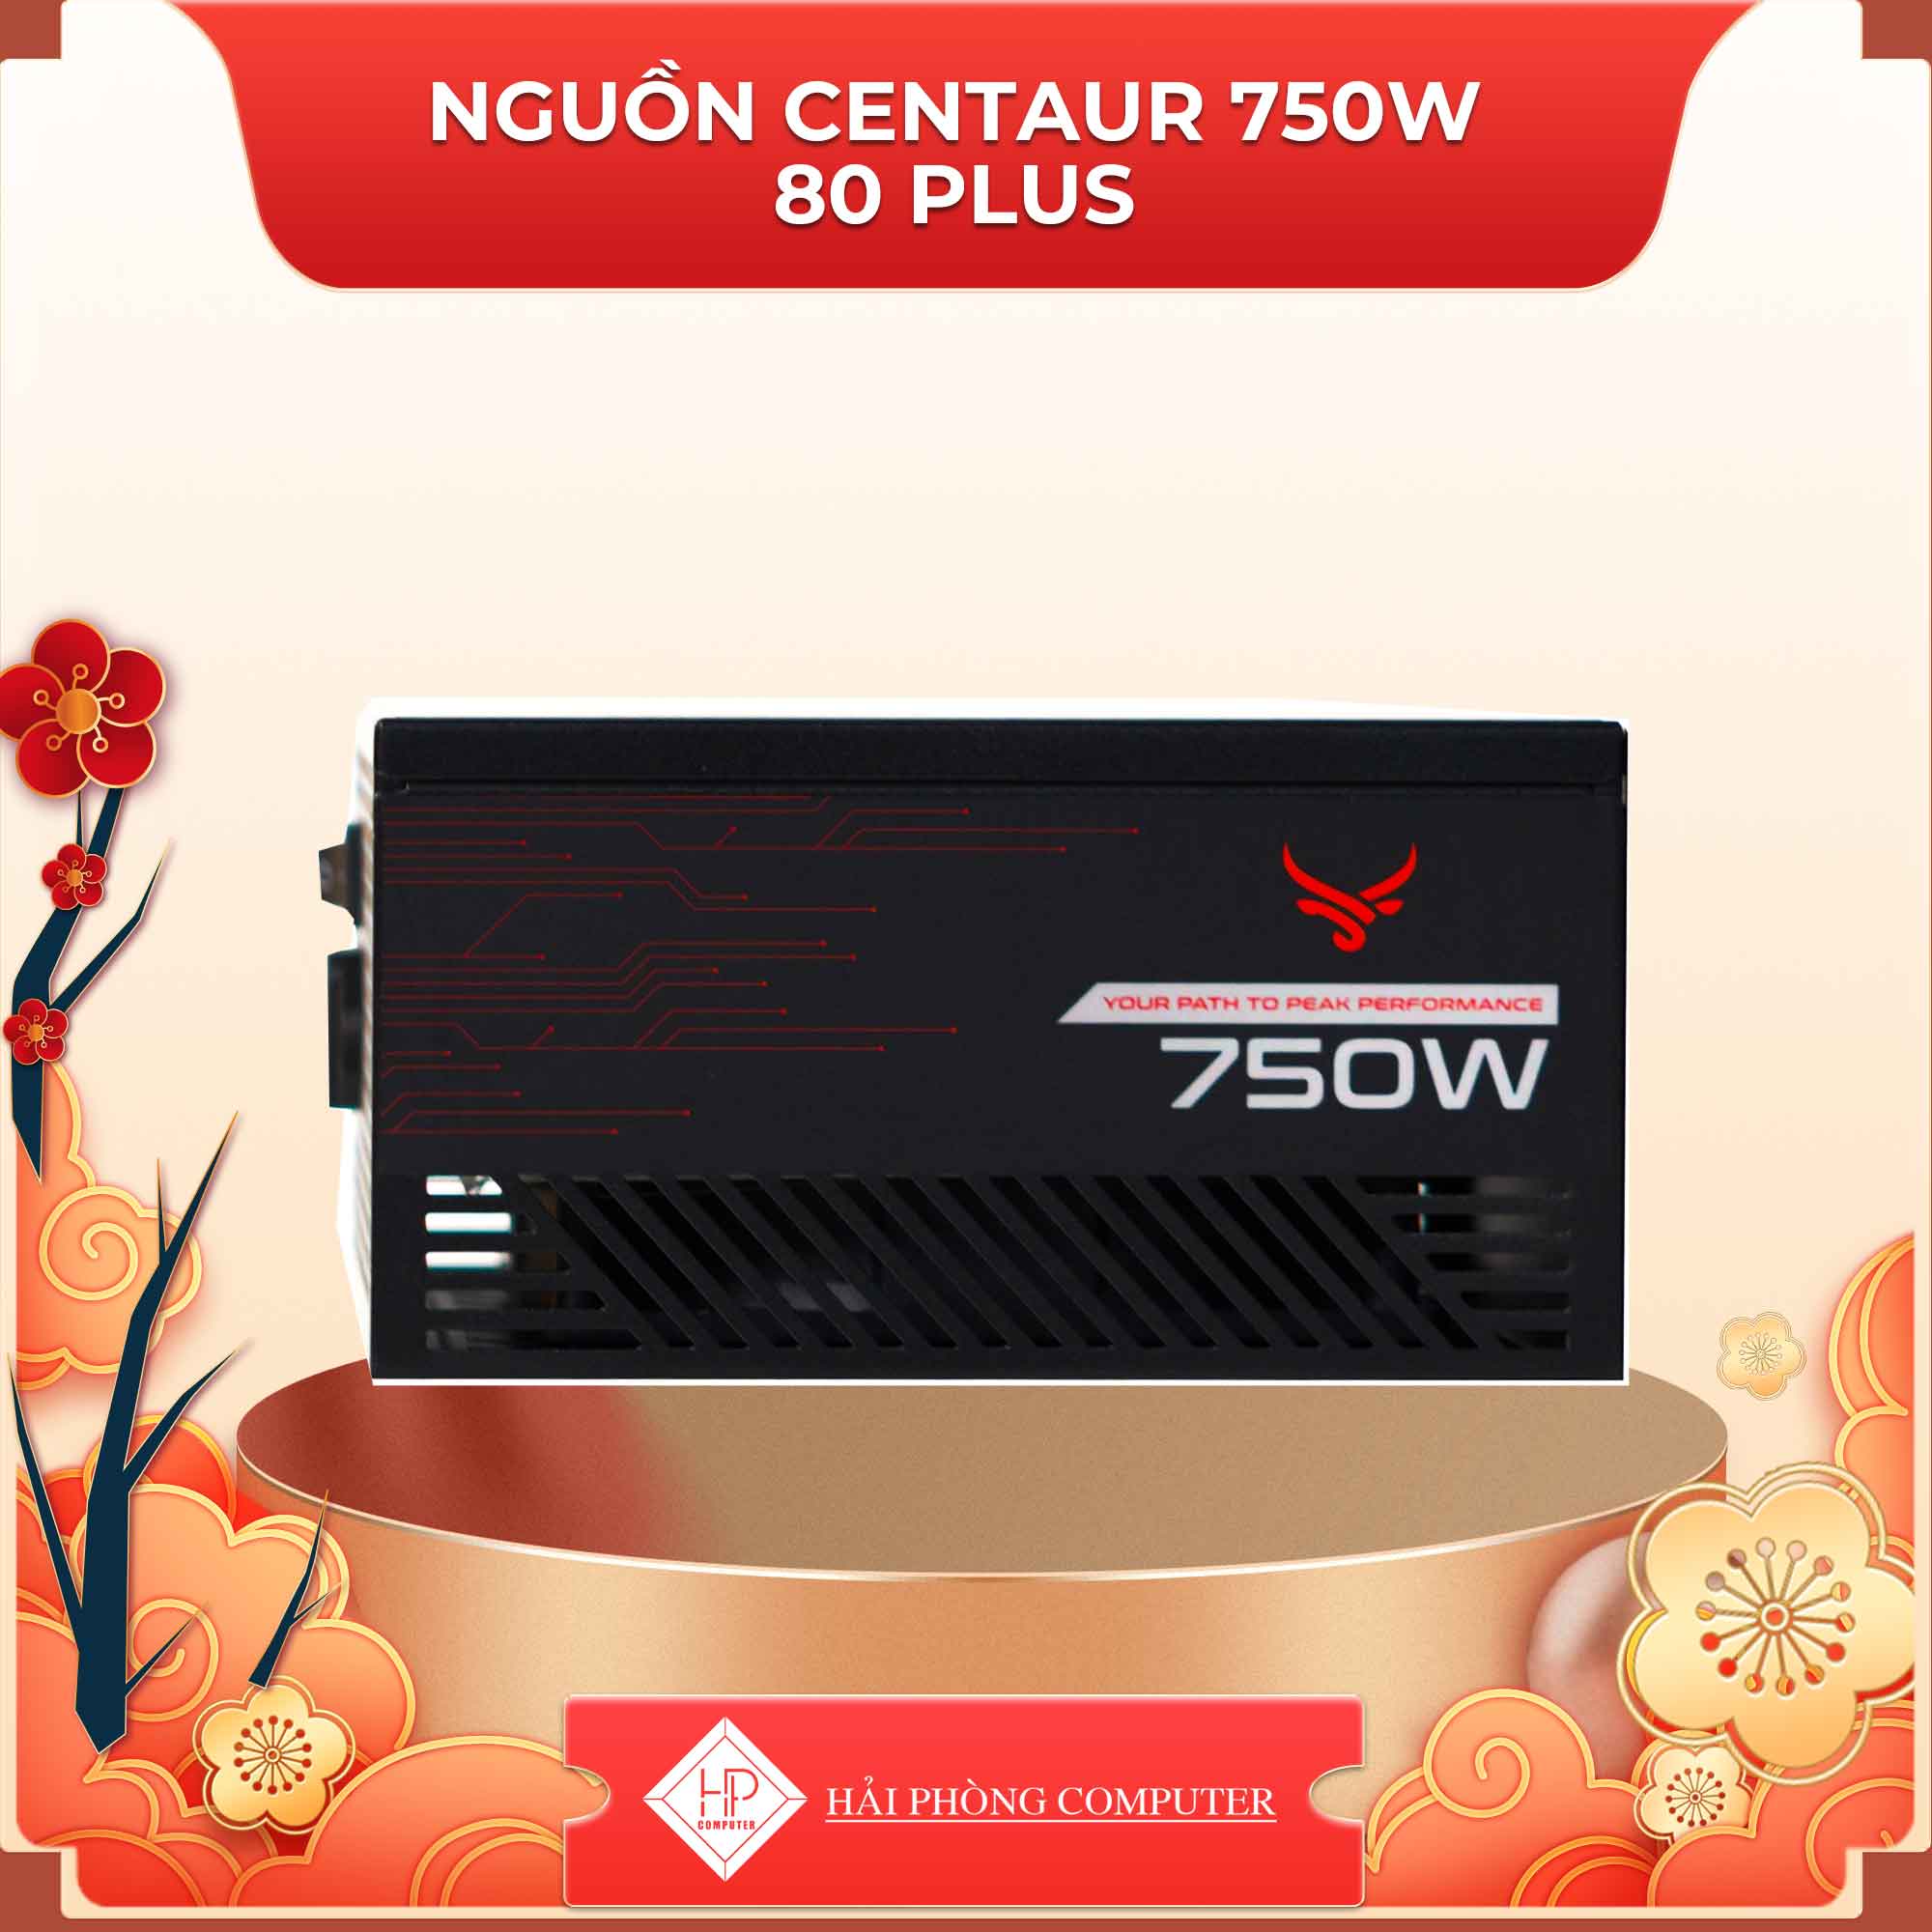 Nguồn Centaur 750W 80Plus